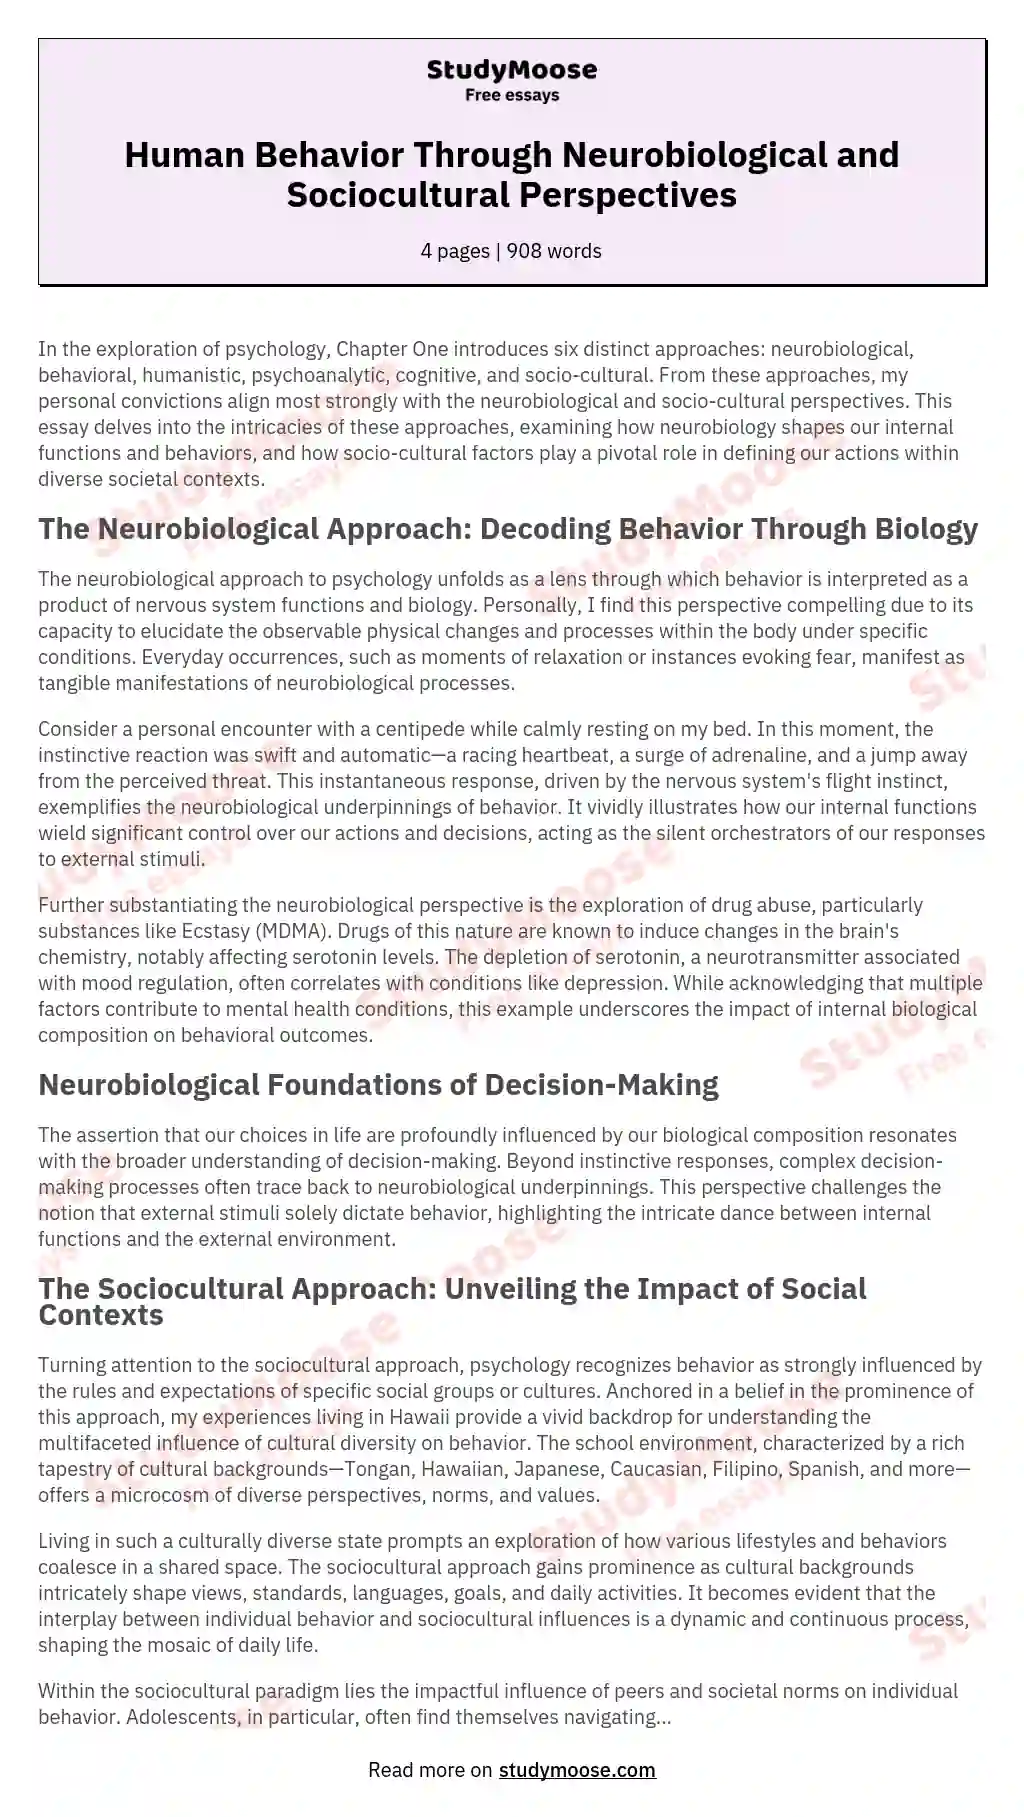 Human Behavior Through Neurobiological and Sociocultural Perspectives essay